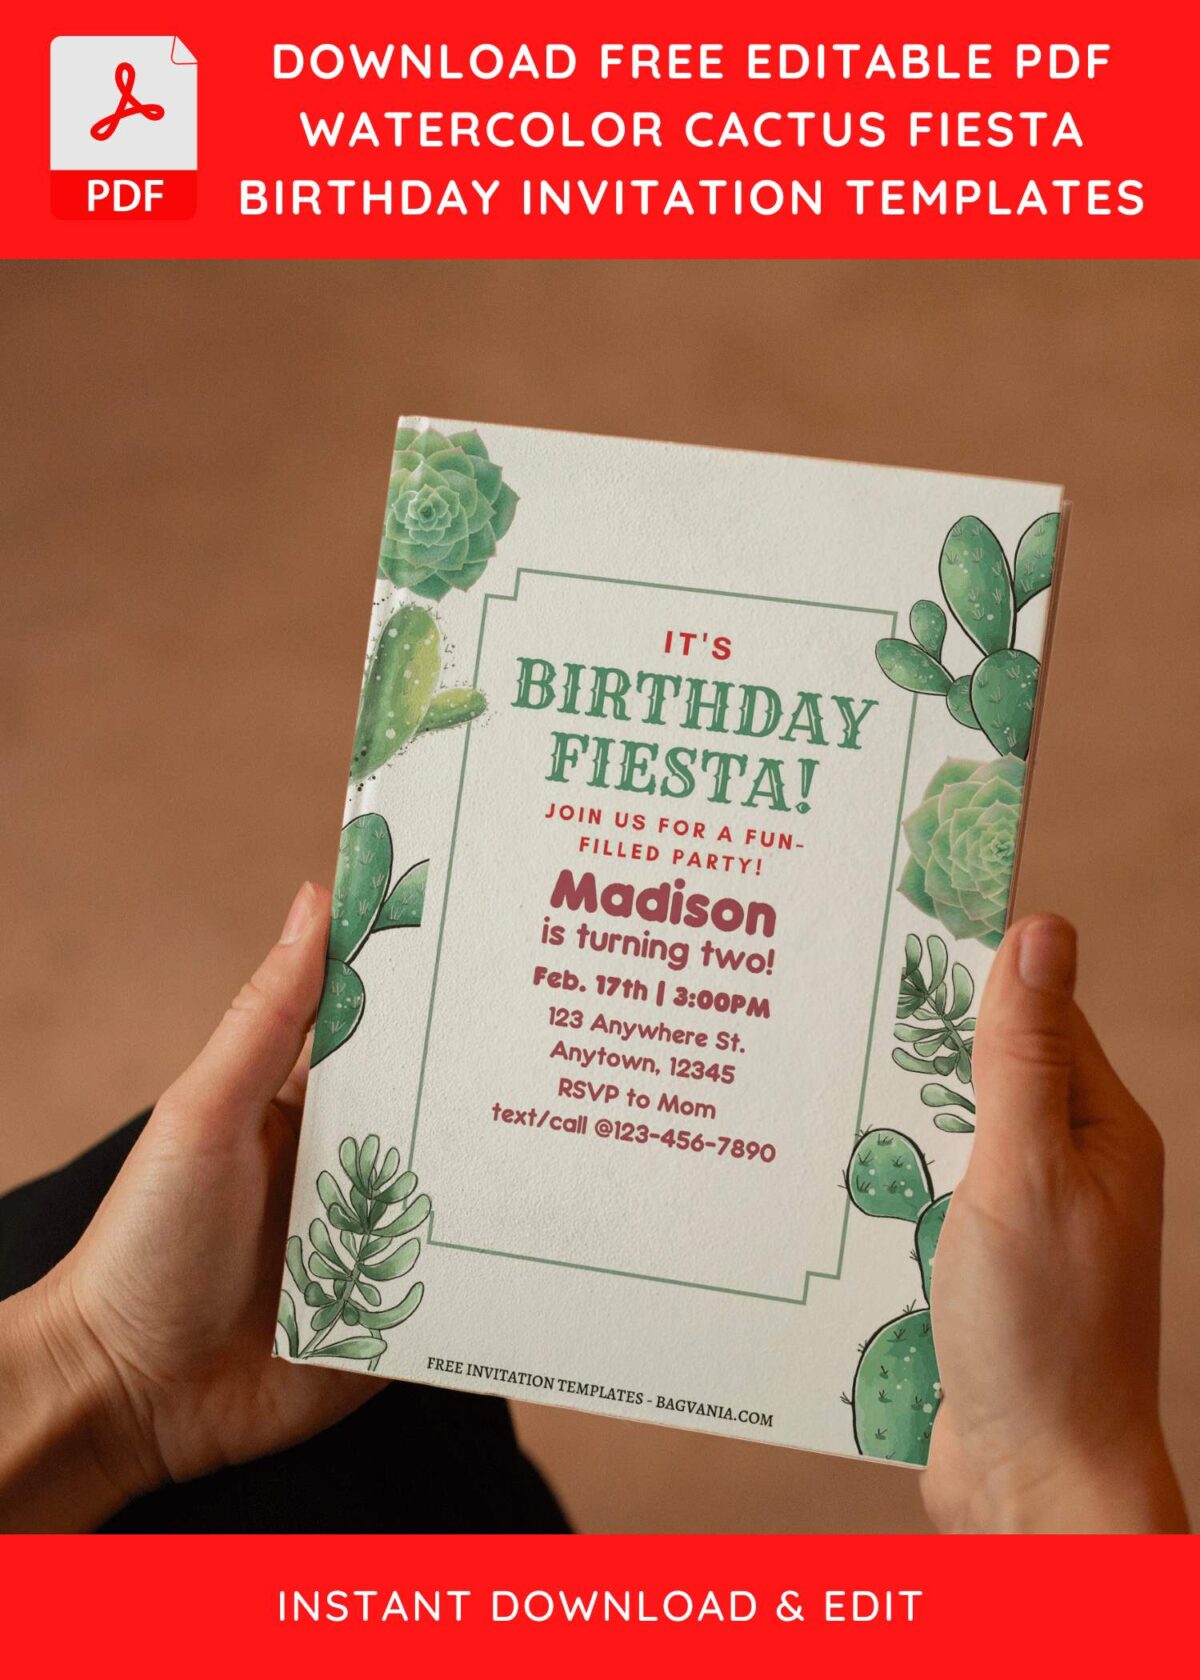 (Free Editable PDF) Birthday Fiesta Cactus Invitation Templates E